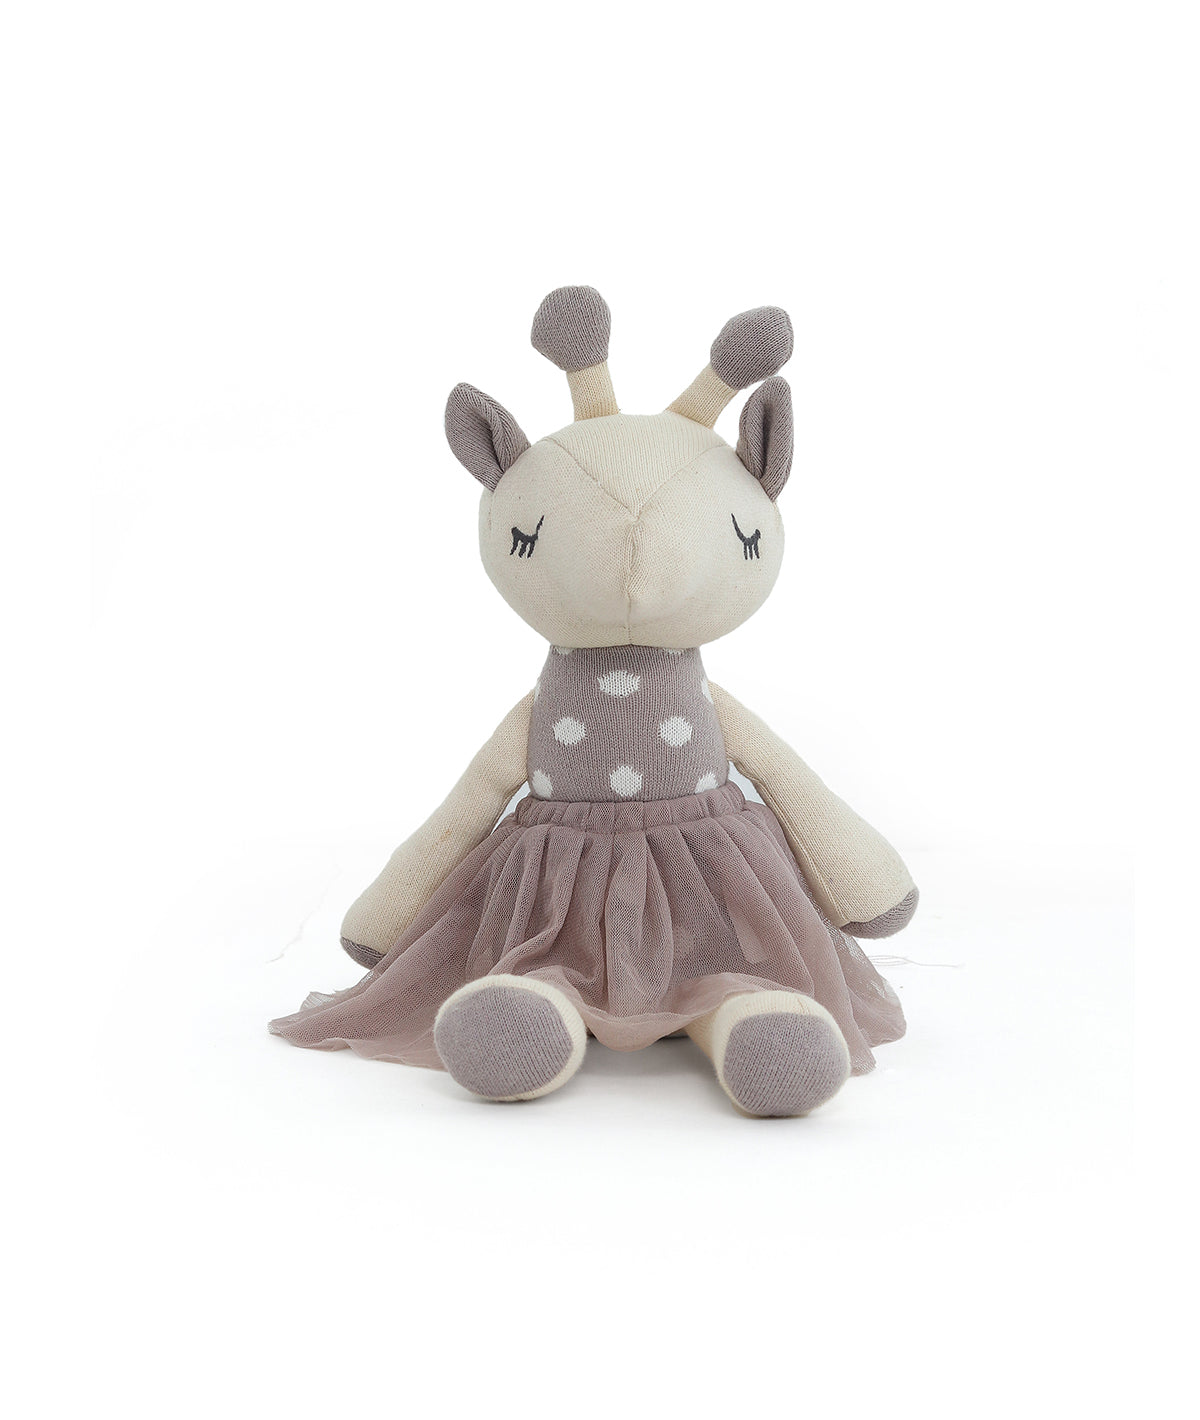 Georgie Giraffe Cotton Knitted Stuffed Soft Toy (Natural & Steel Grey)